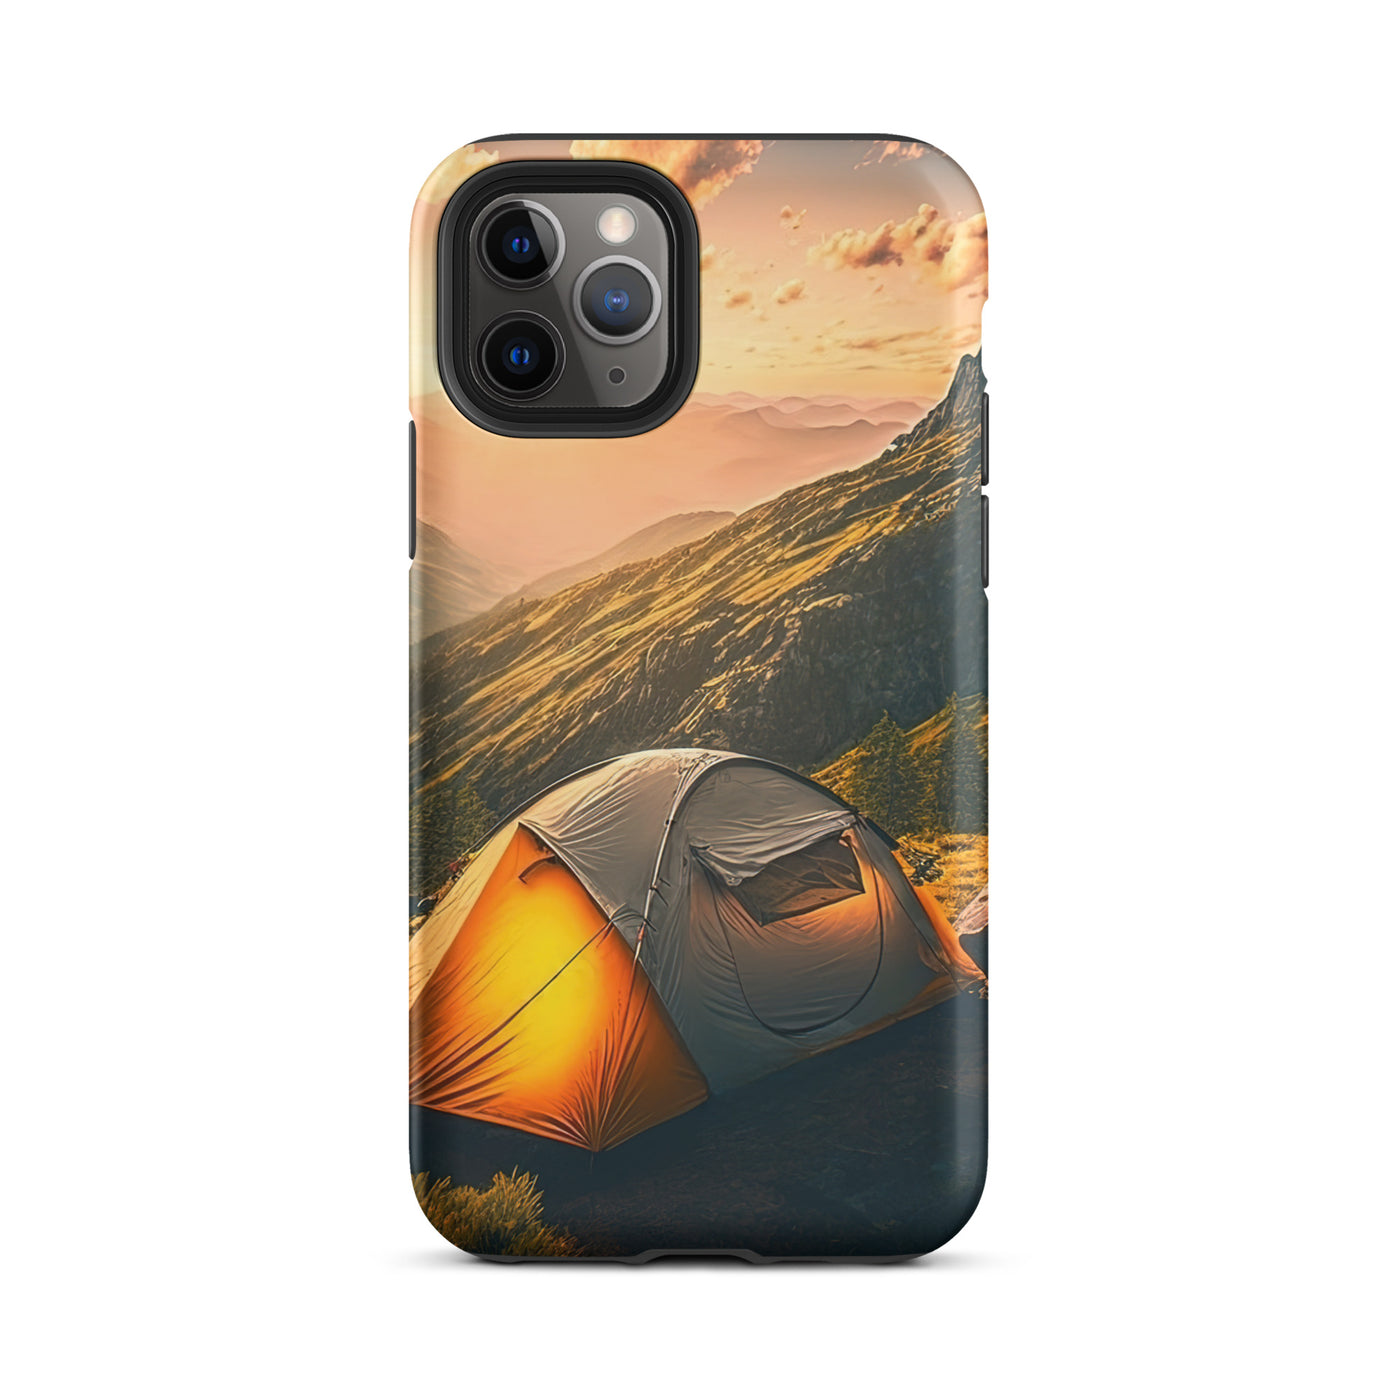 Zelt auf Berg im Sonnenaufgang - Landschafts - iPhone Schutzhülle (robust) camping xxx iPhone 11 Pro